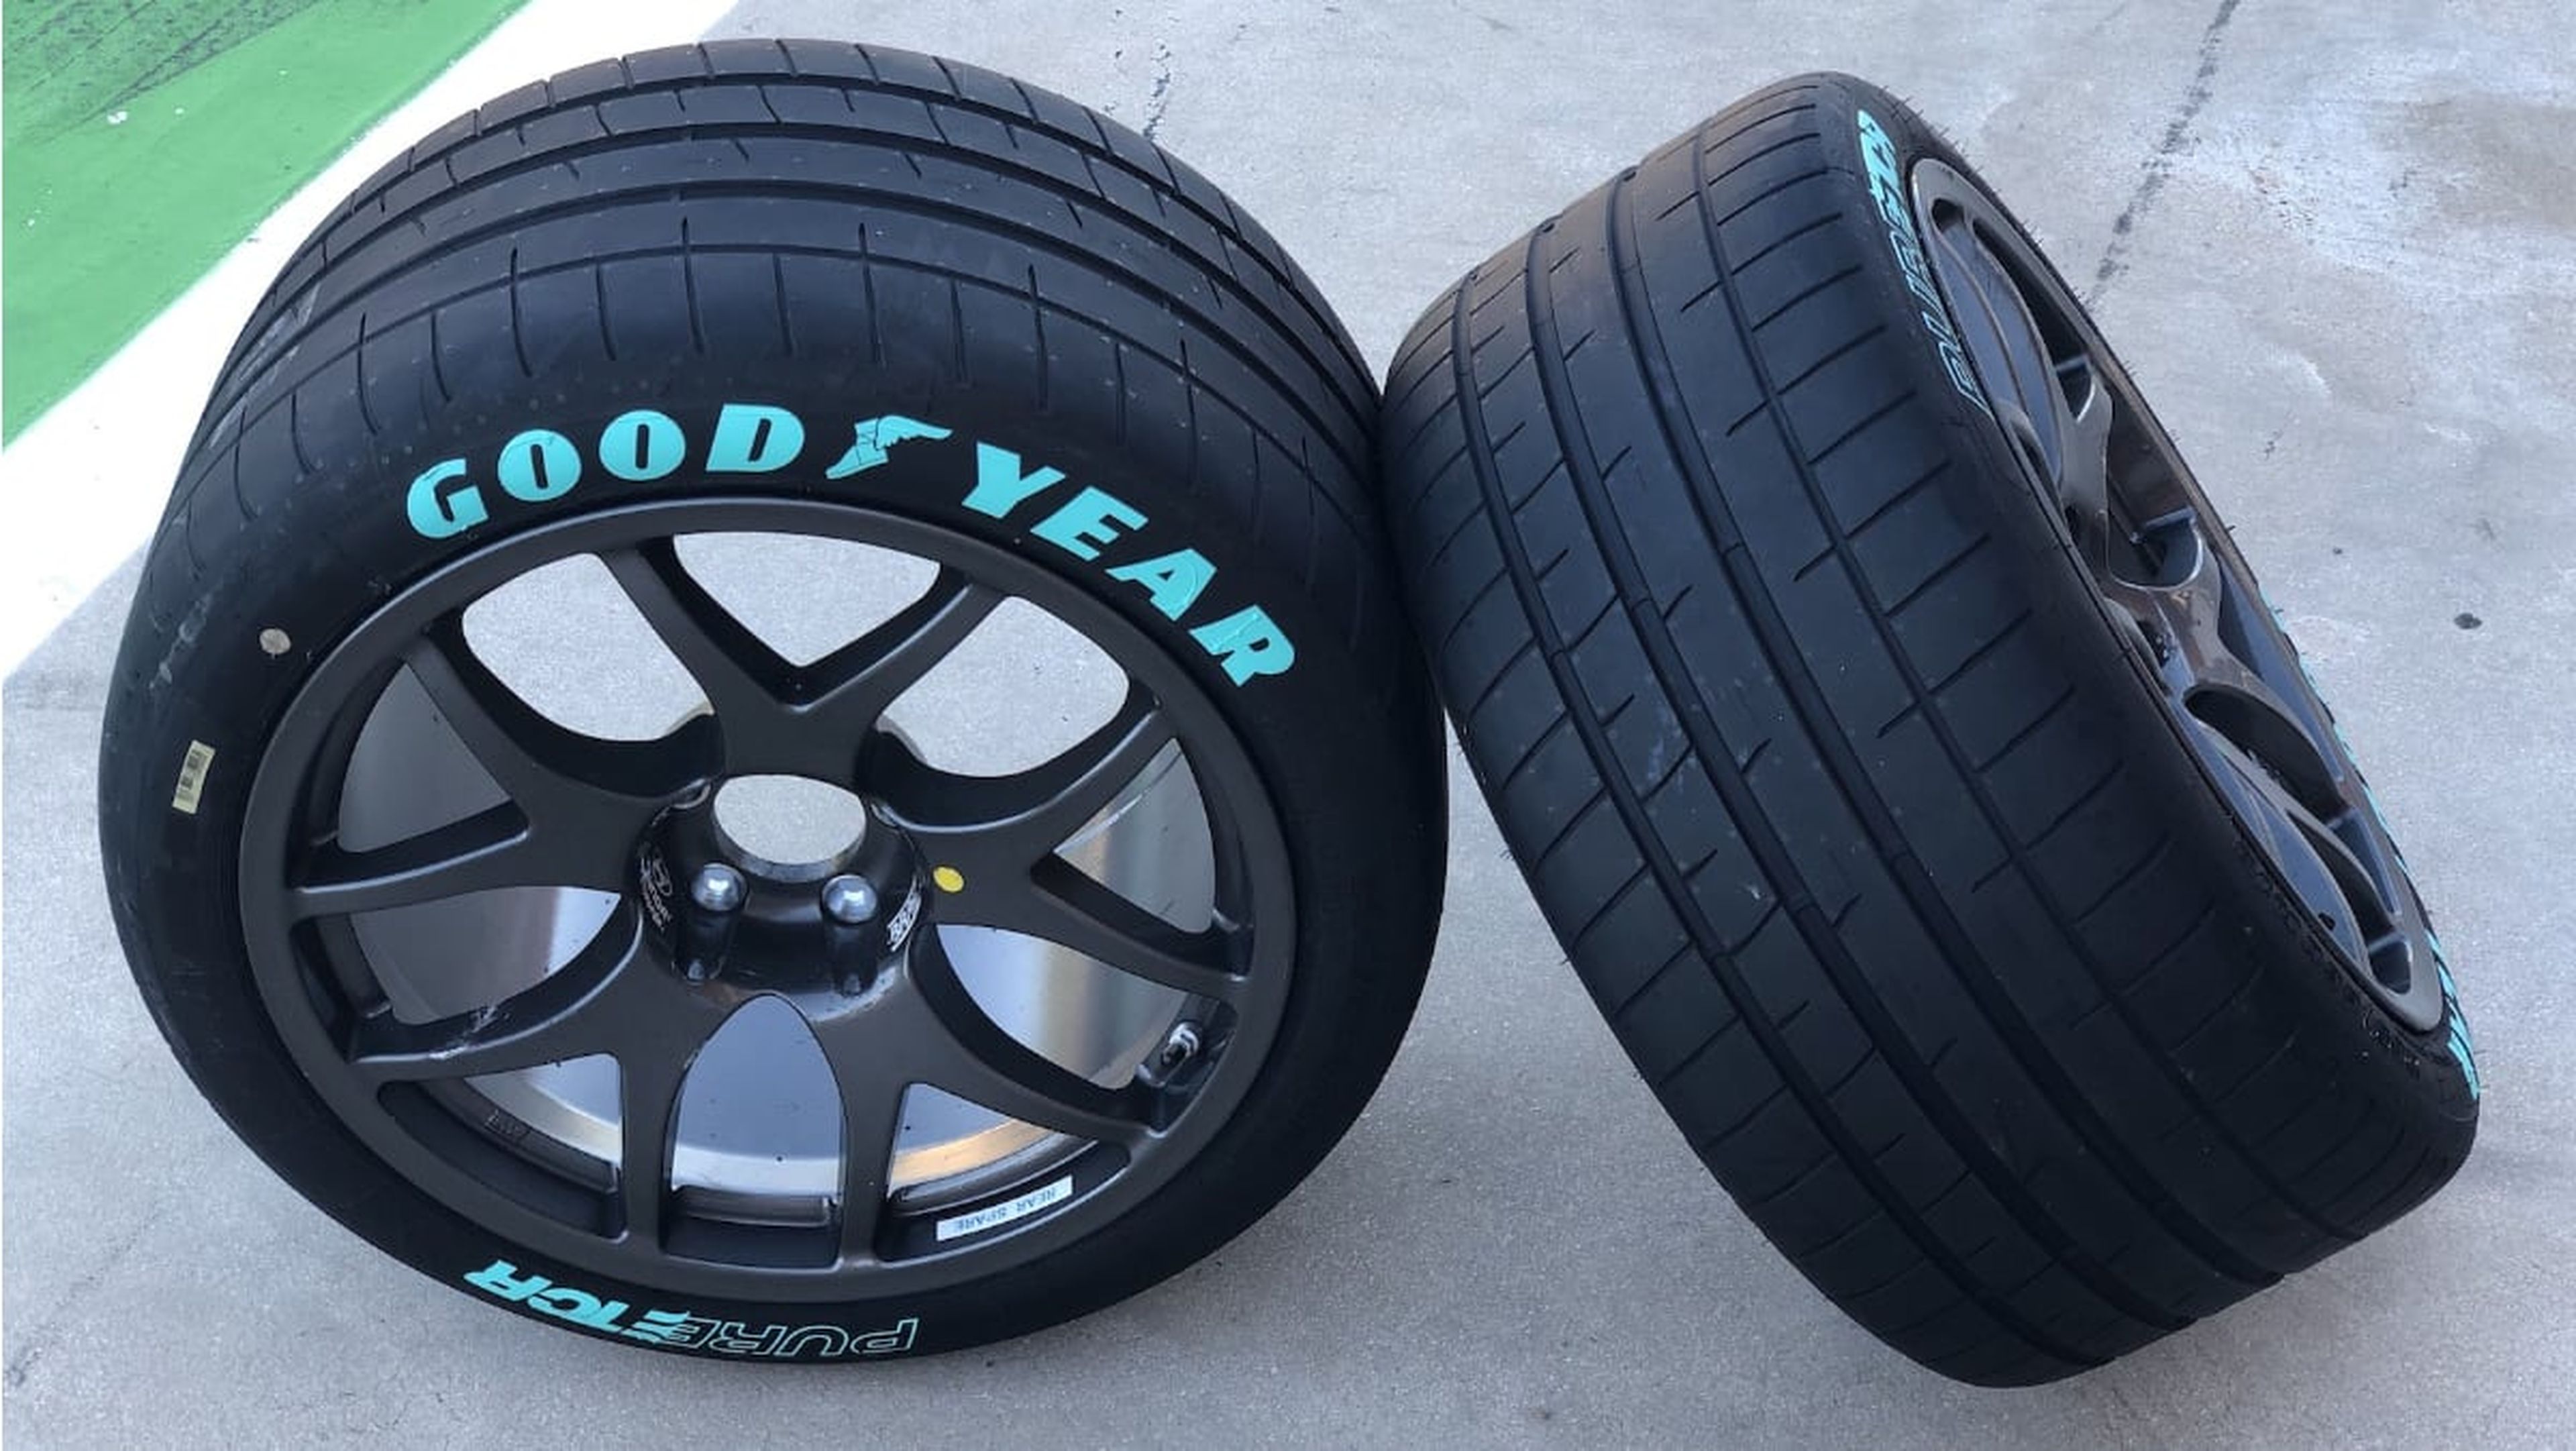 Goodyear suministrará los neumáticos del ETCR